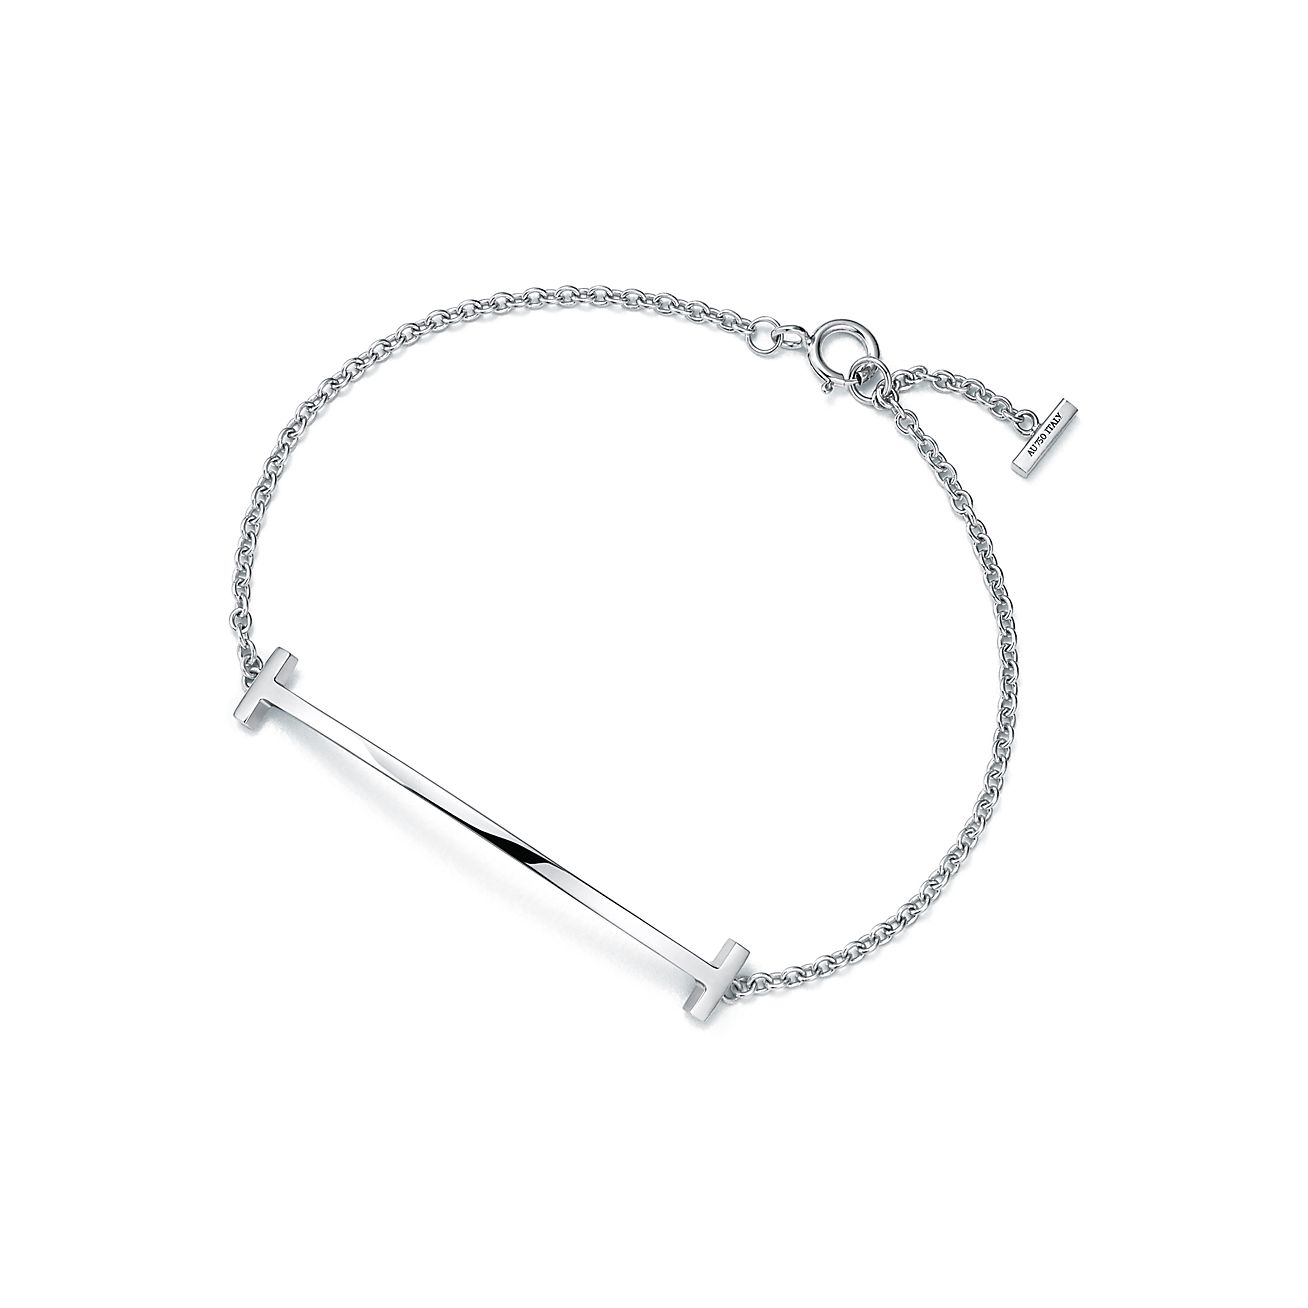 Tiffany Knot Double Row Bracelet in White Gold with Diamonds  Tiffany  Co